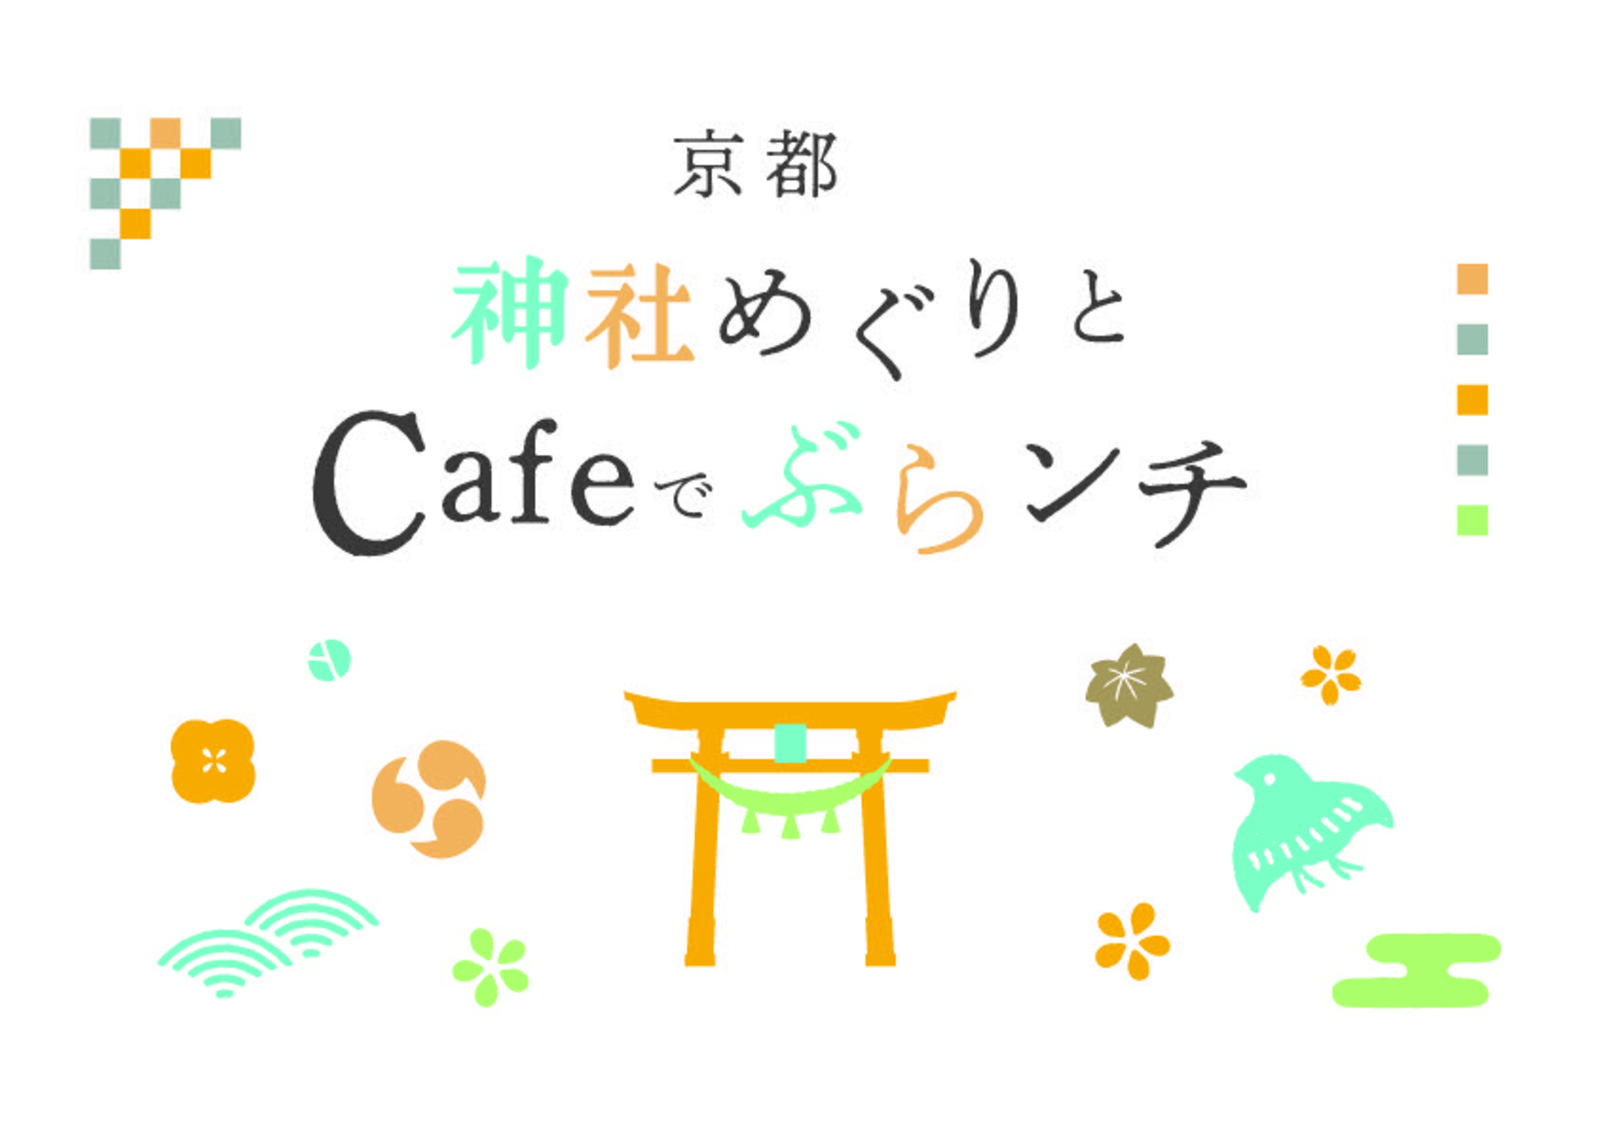 Cafe &神社⛩️京都駅エリアをぶらりとお散歩